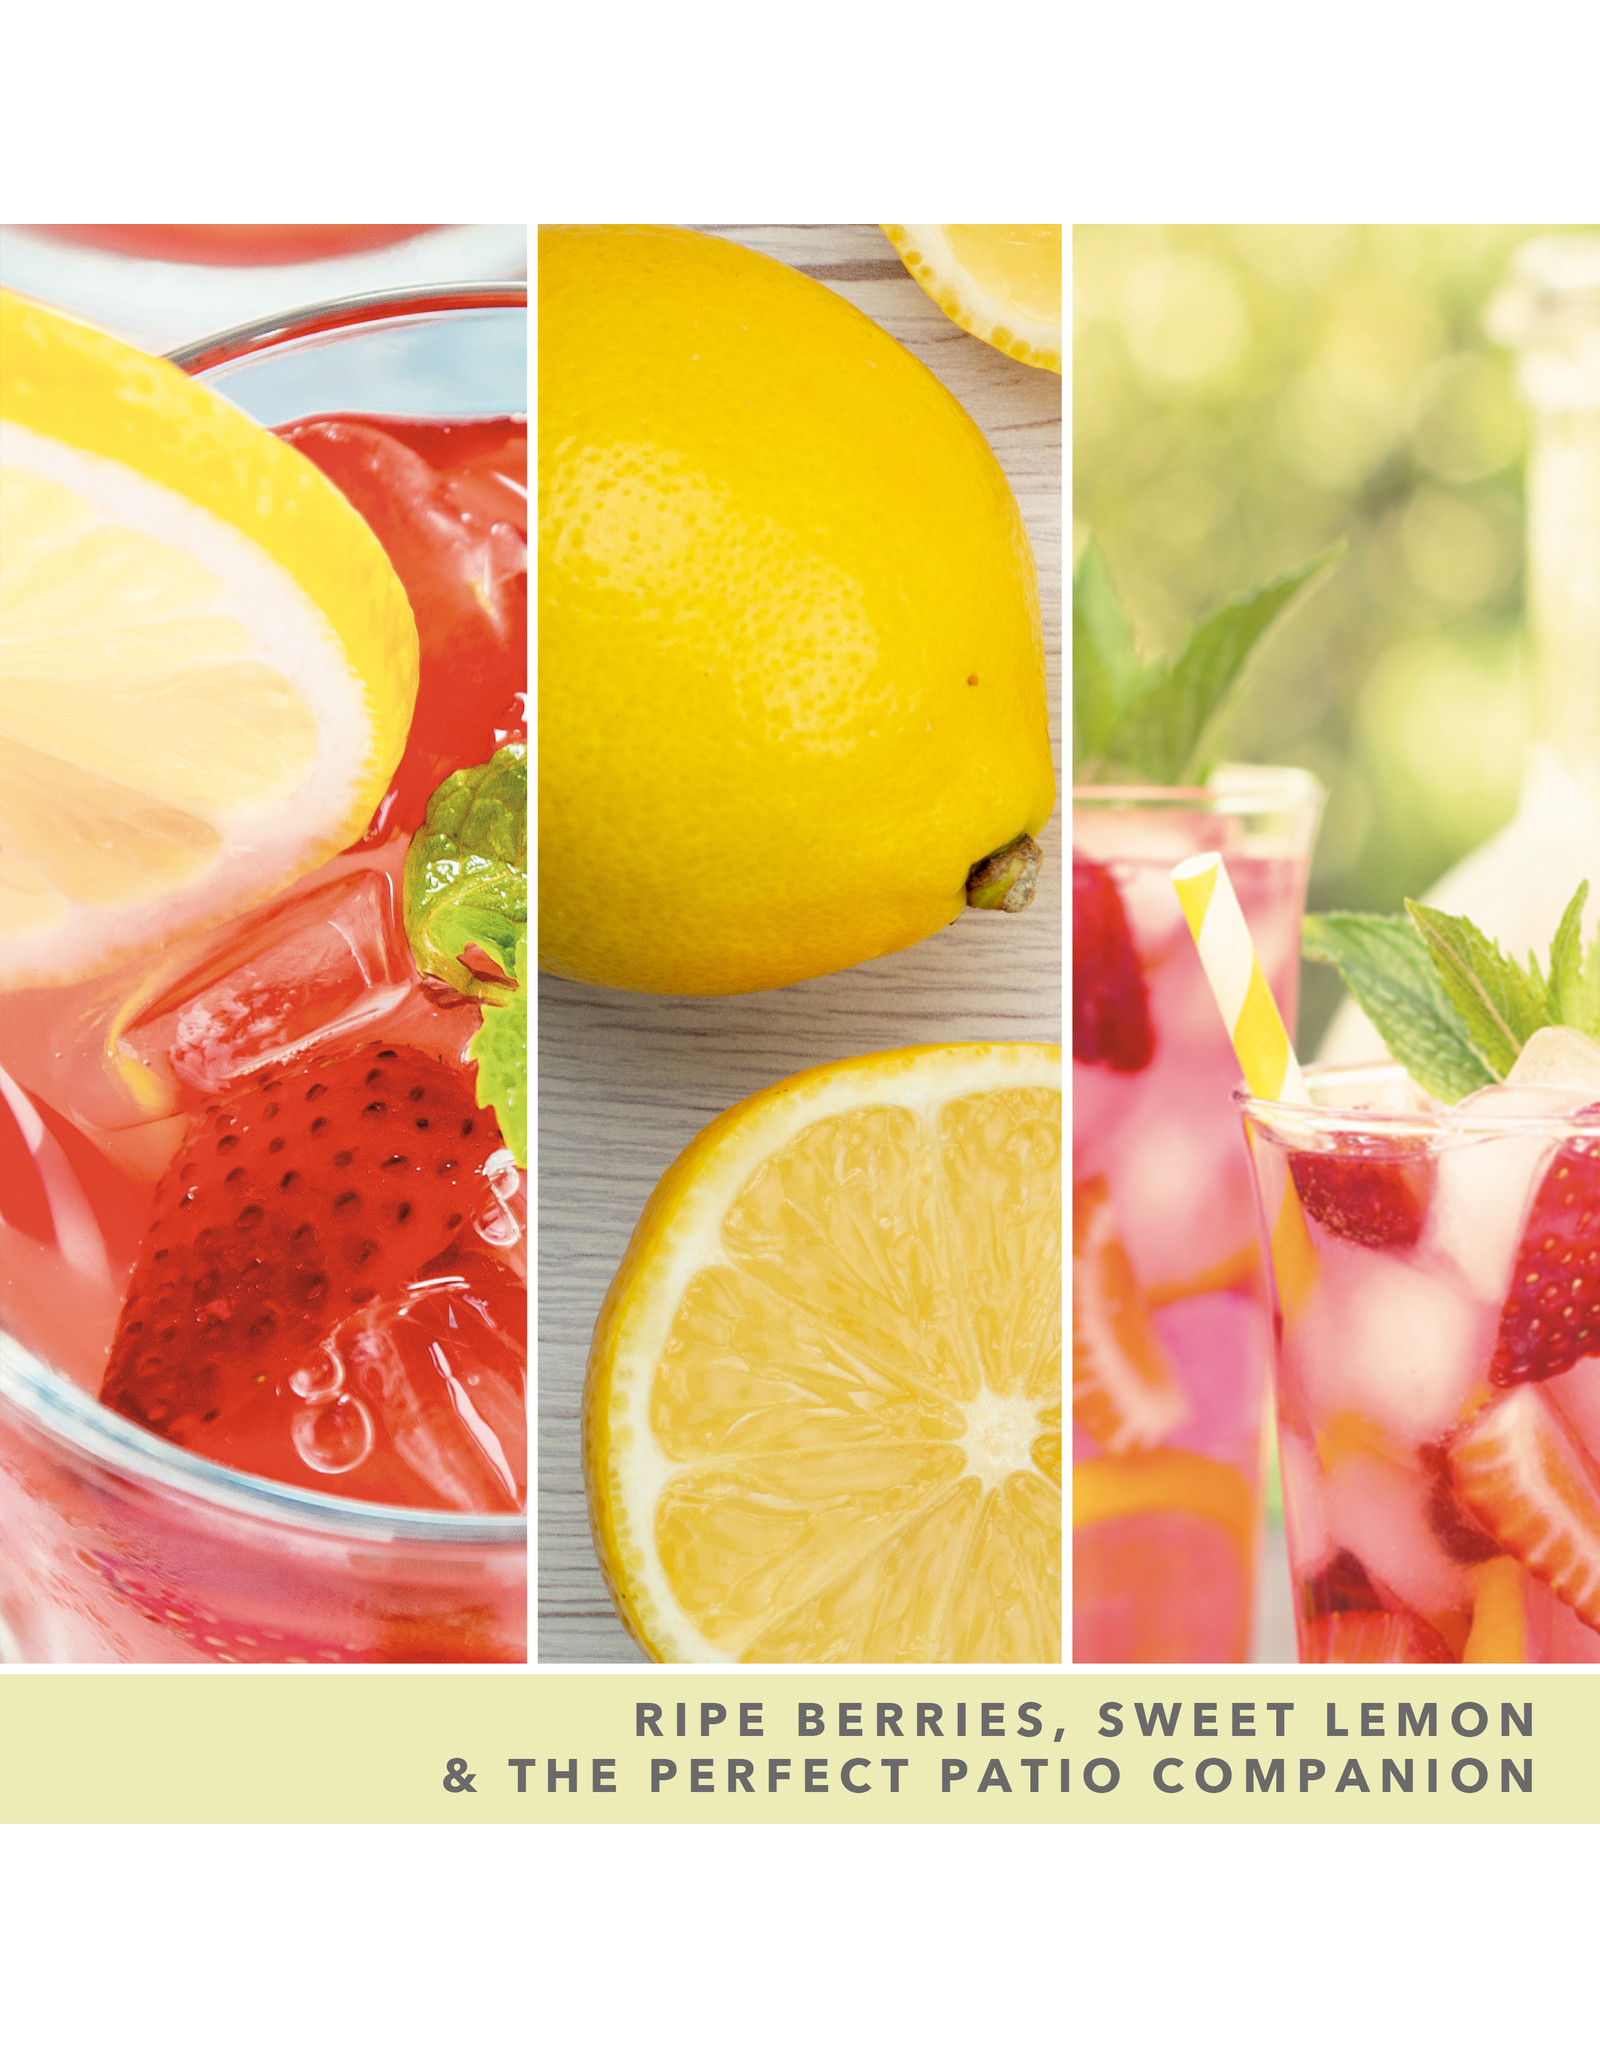 Yankee Candle Iced Berry Lemonade - Wax Melt